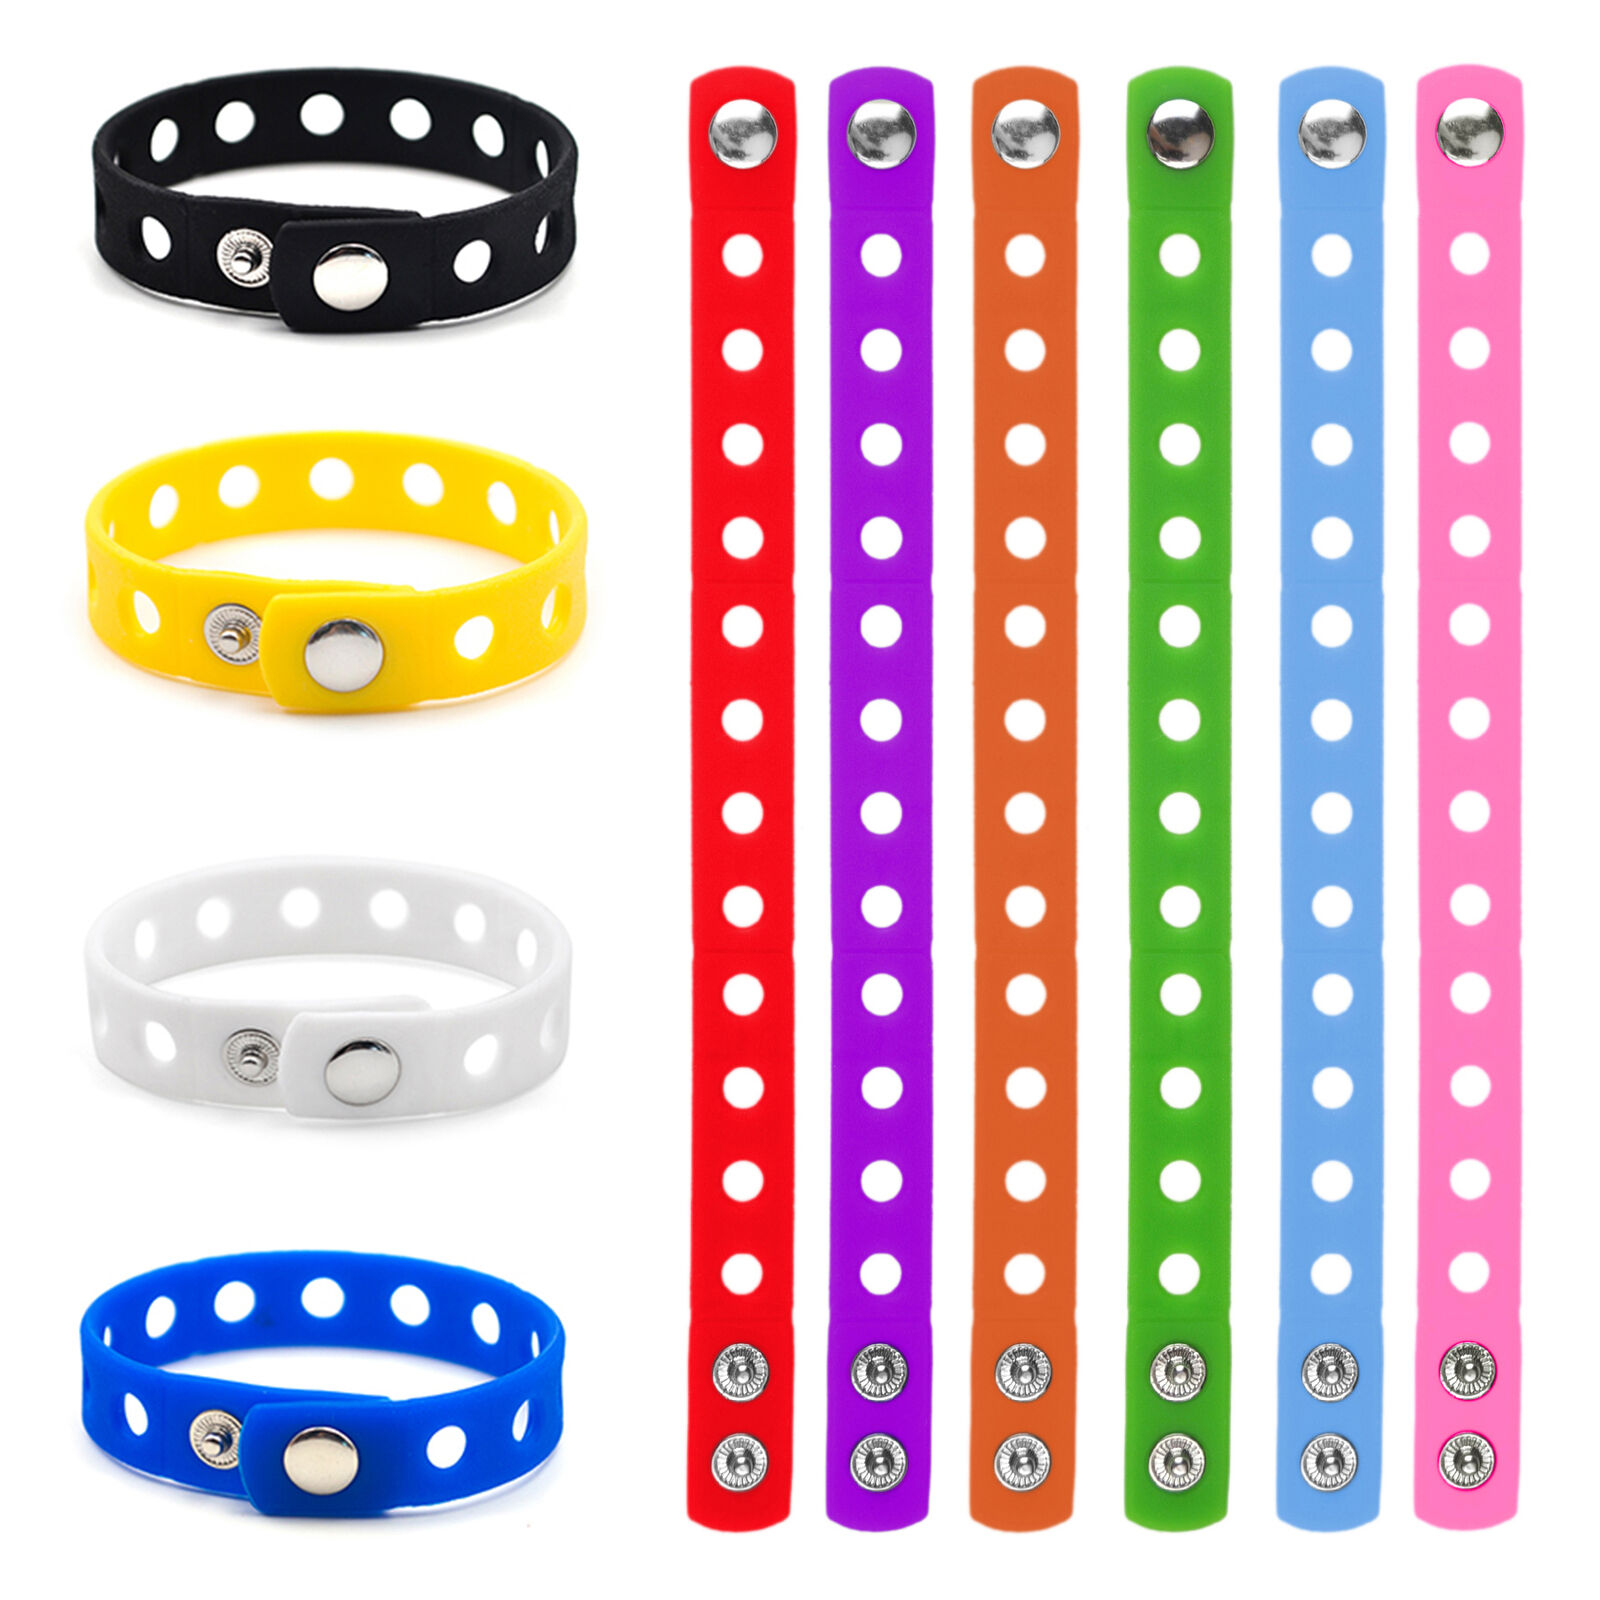 10 PCS Rubber Bracelets for Kids Adjustable Wristbands Shoe Charms Party Favors GOGO DD05171_KIDASSORTED-10PCS